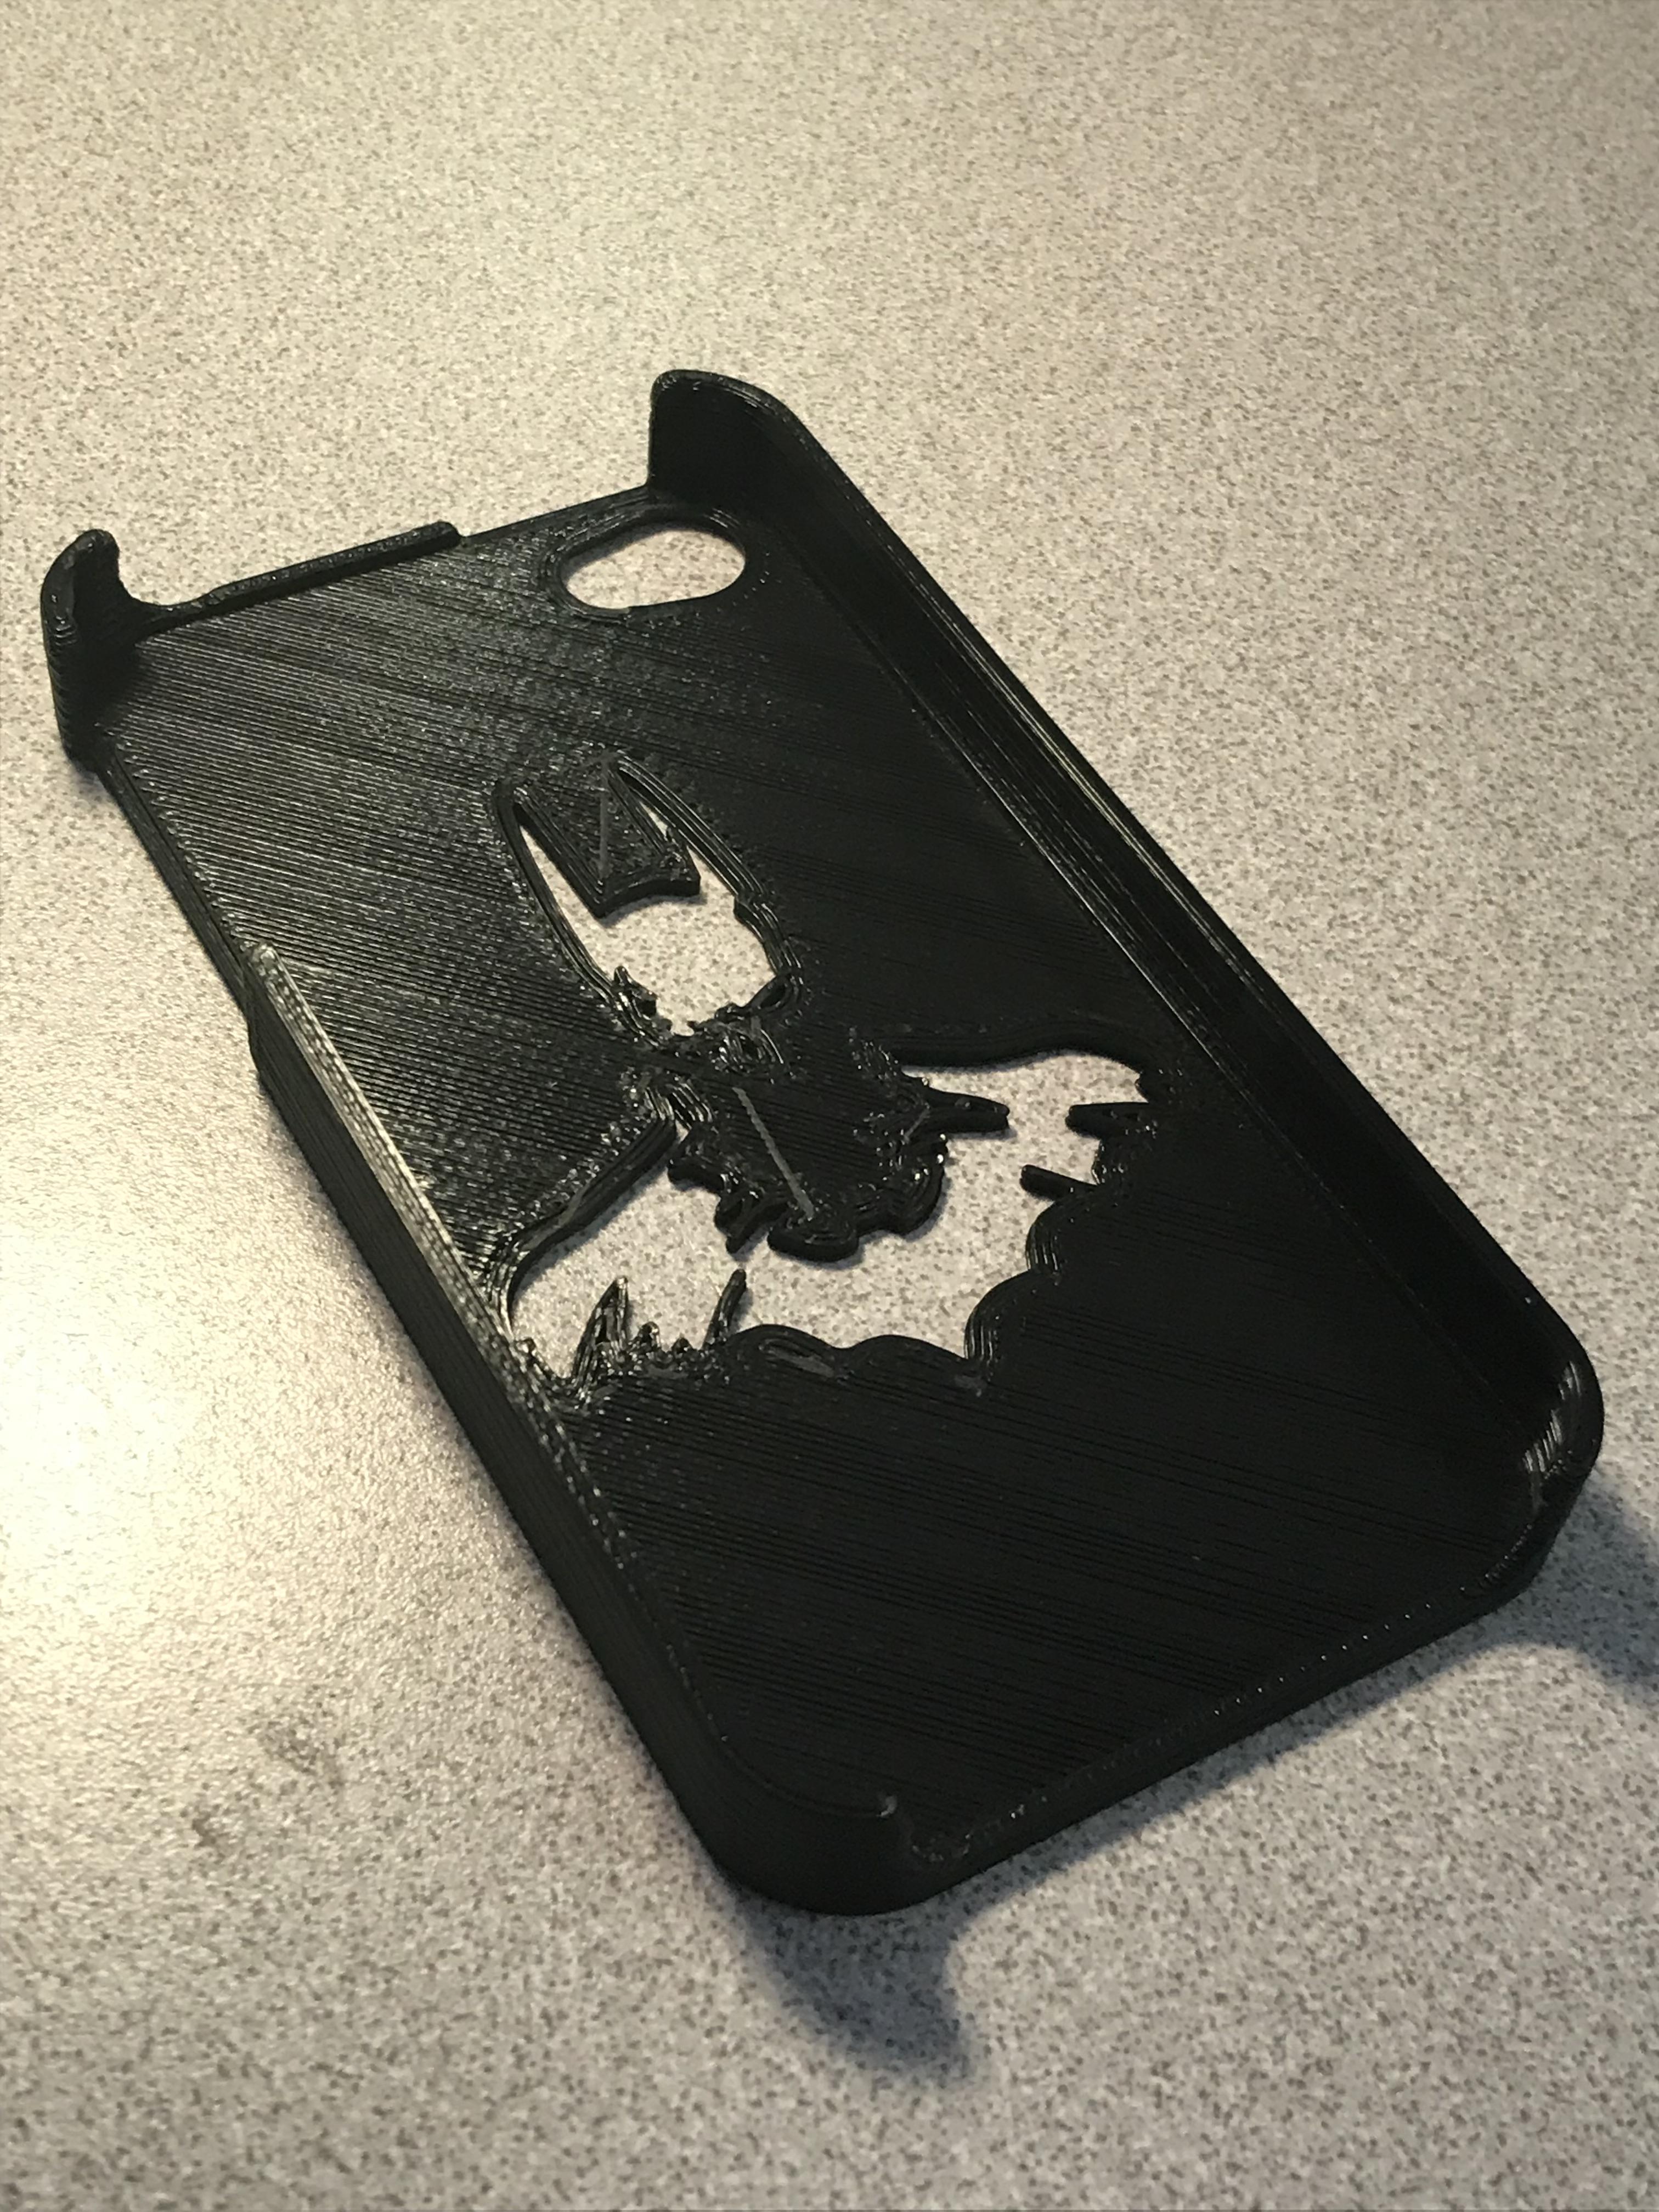 Iphone 4S Batman Silhouette case